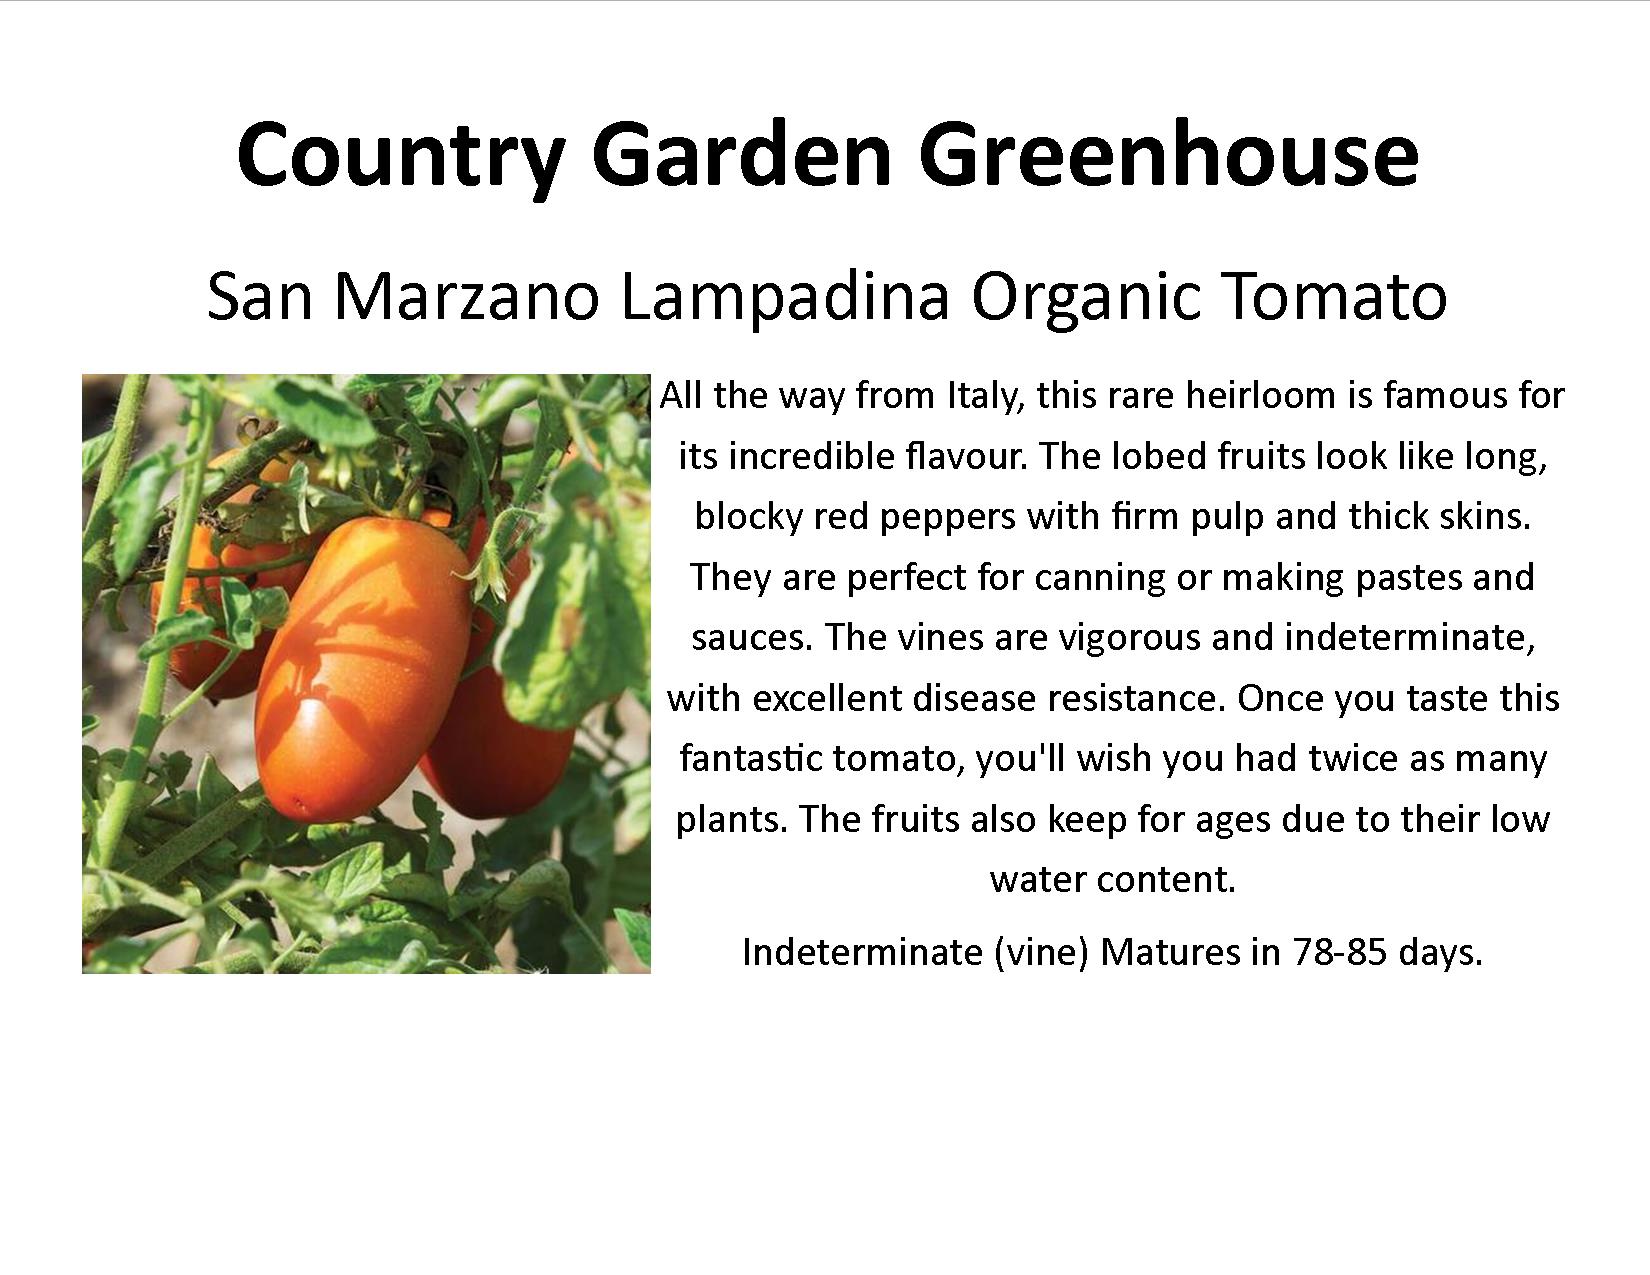 San Marzano Lampadina Organic Tomato